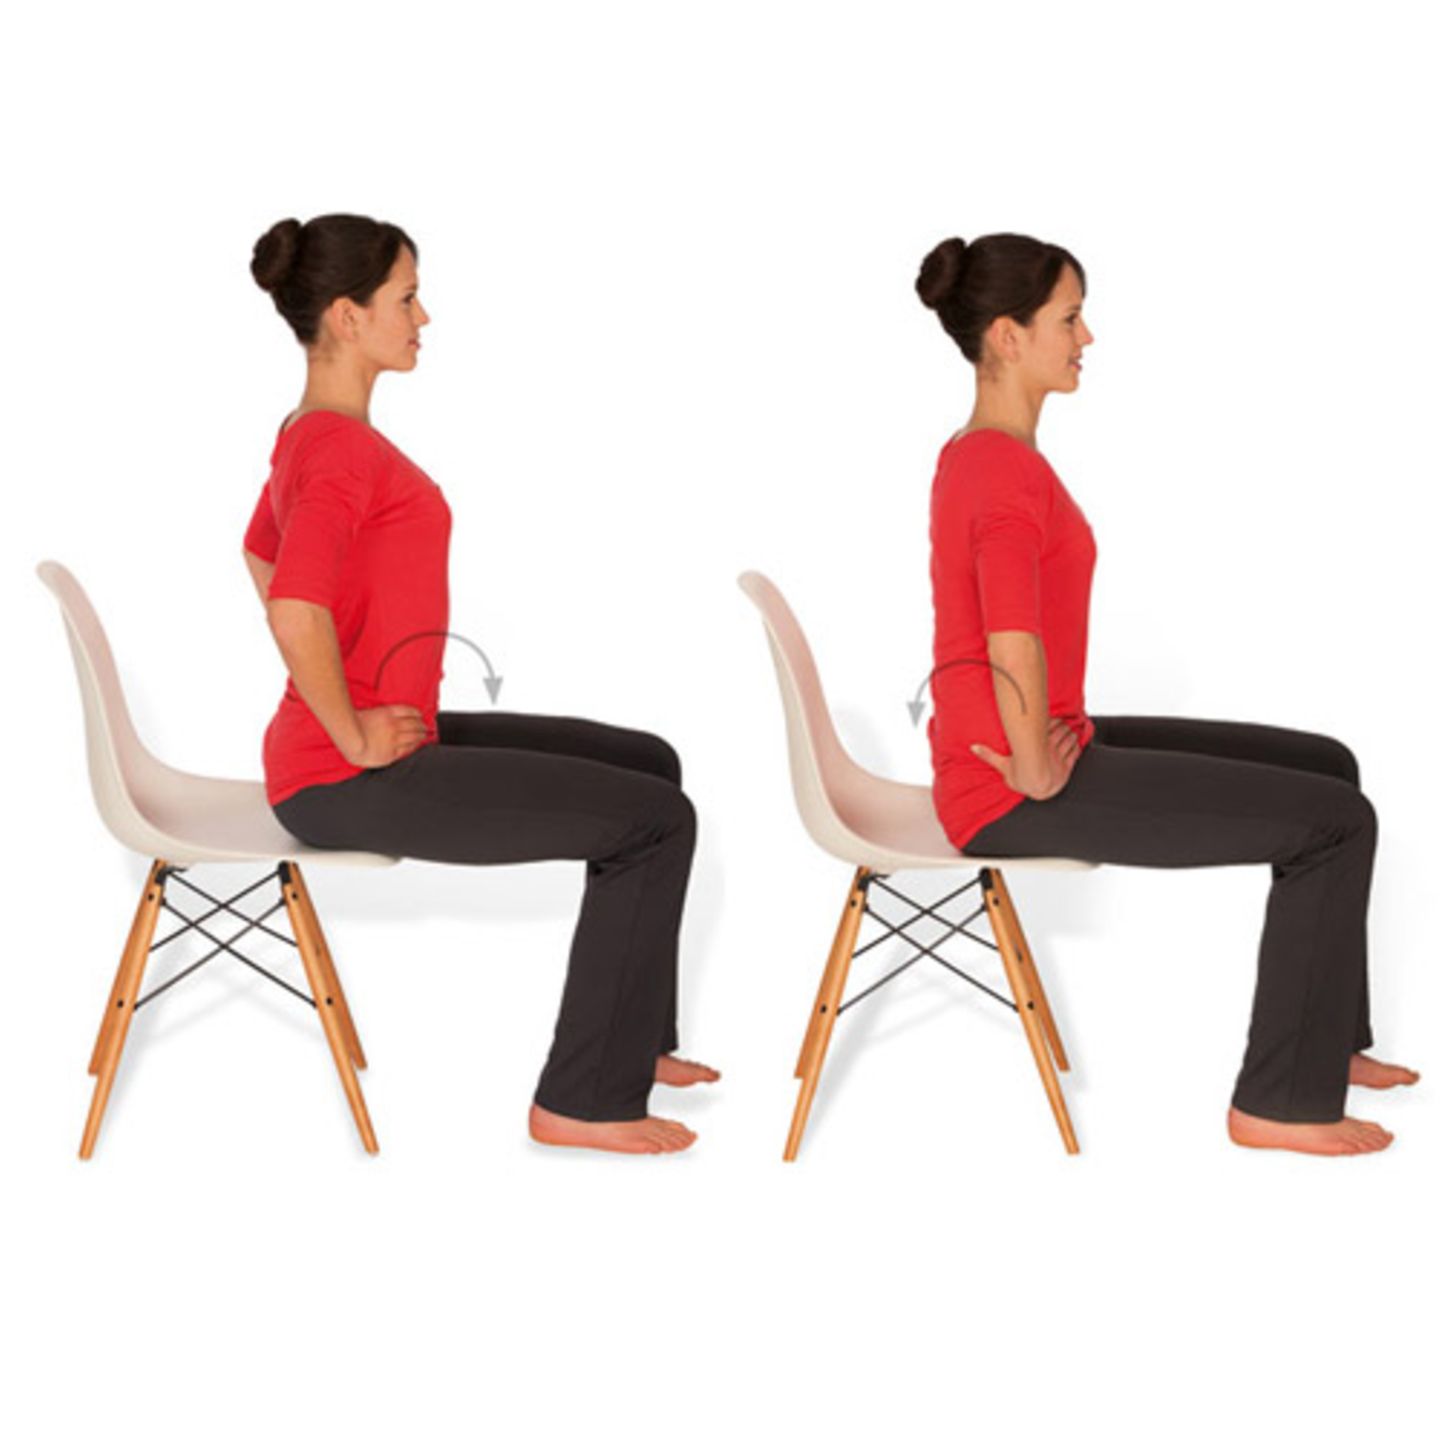 Übung 6: Rücken kräftigen